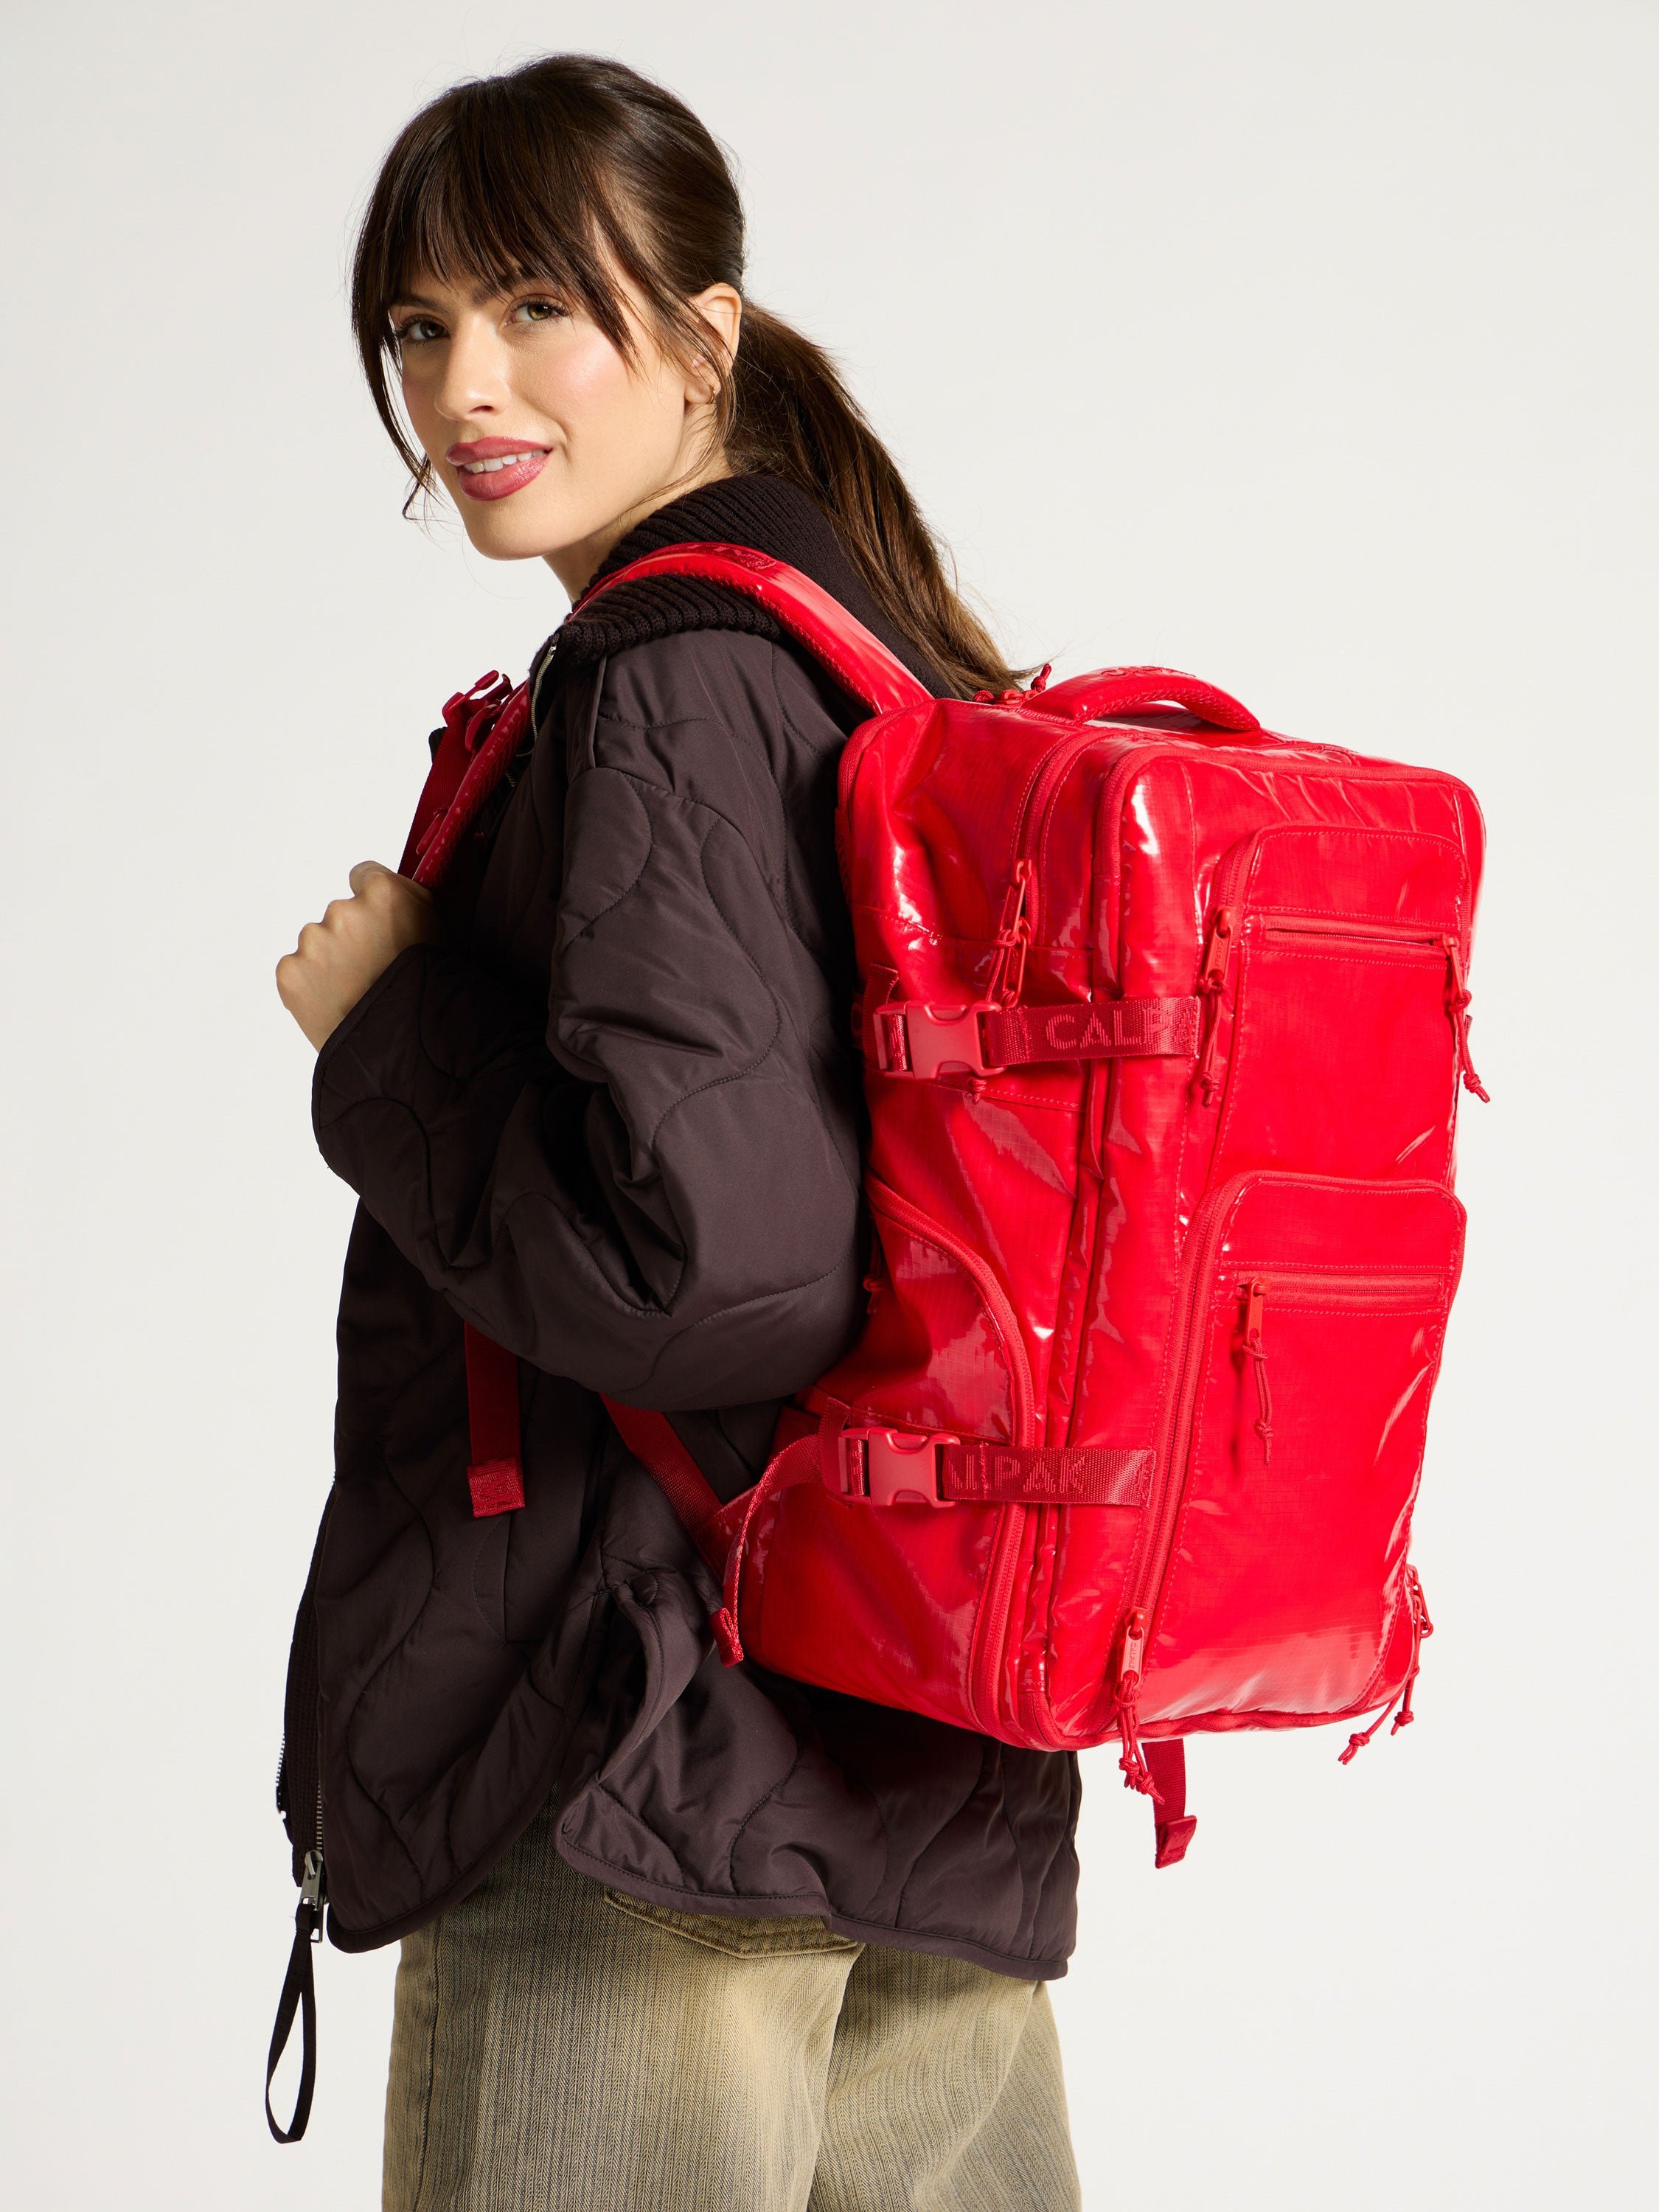 Model wearing CALPAK Terra 26L Laptop Backpack Duffel in red for hiking